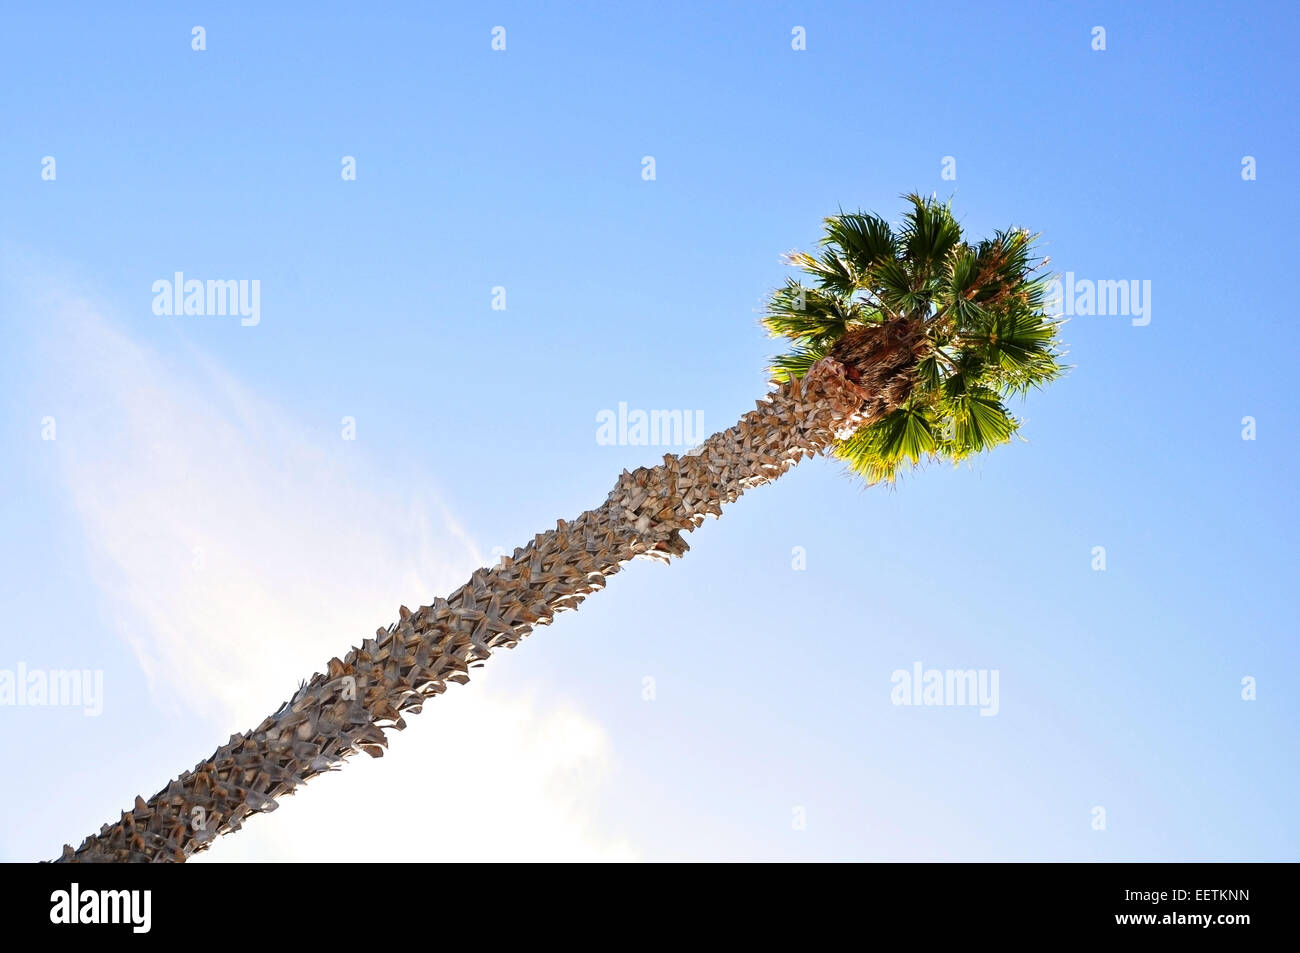 A solitary palm tree in Santa Barbara, CA, USA. Stock Photo